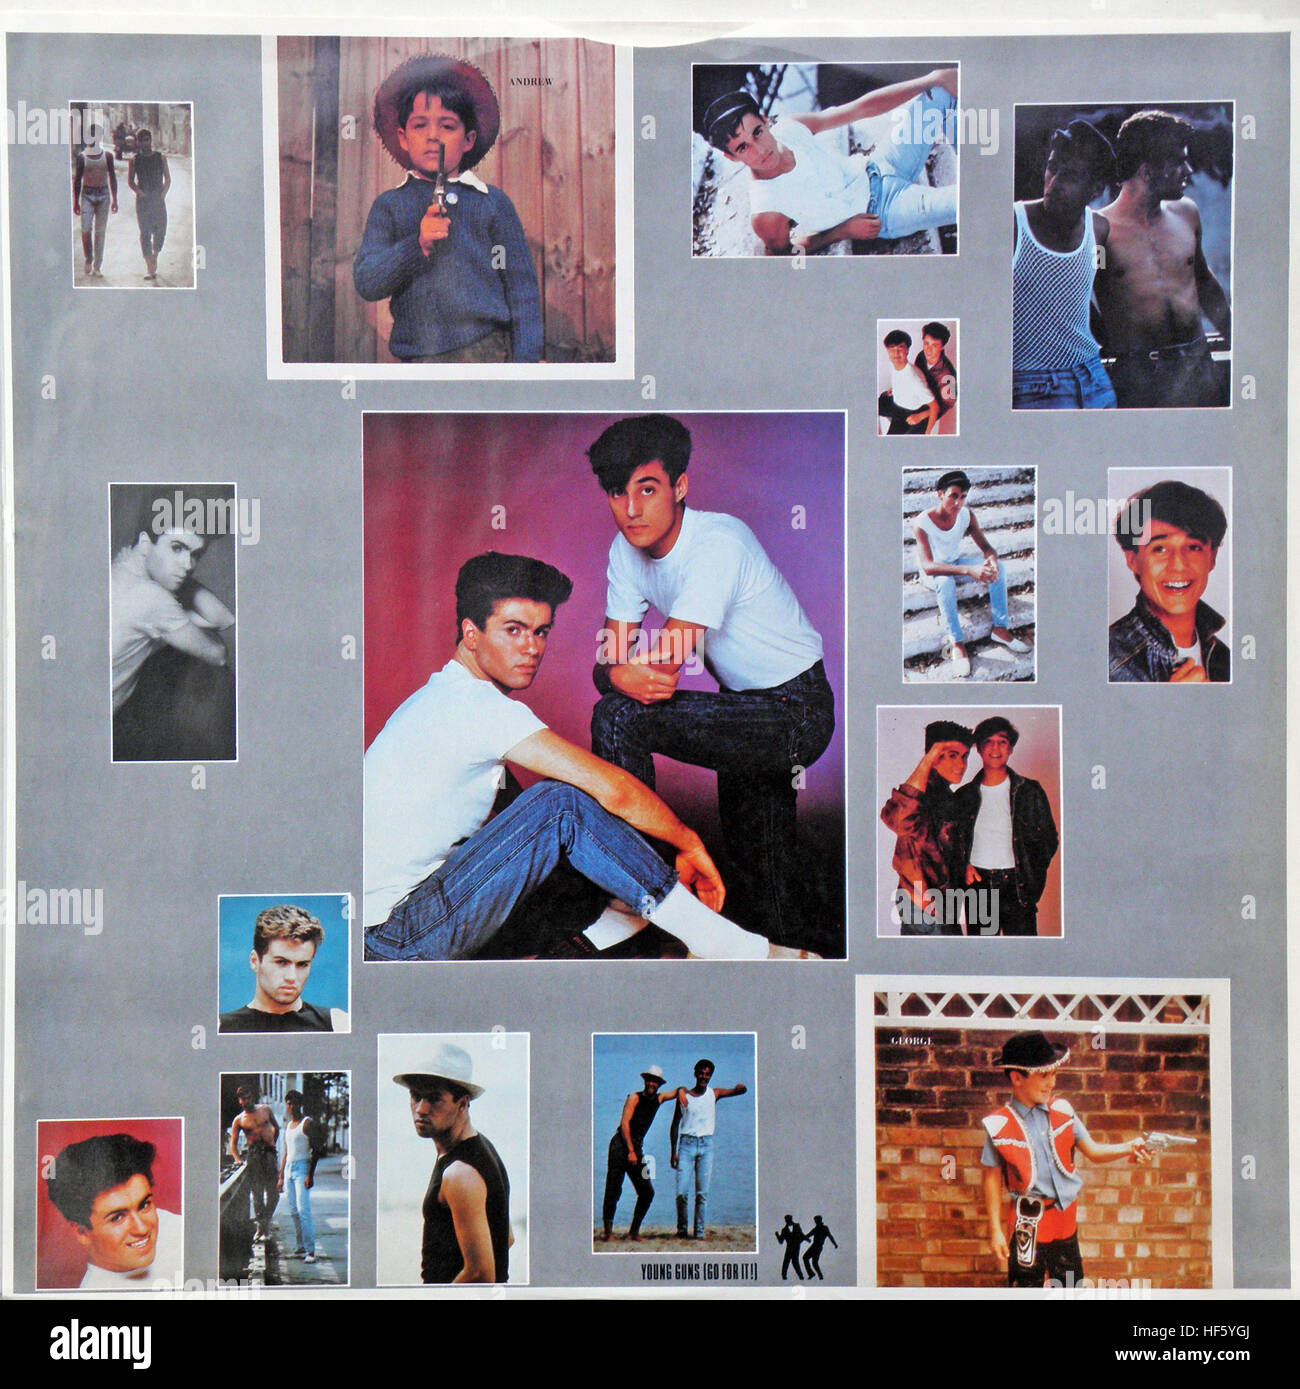 Wham! LP 'Fantastic', gramophone record inner sleeve A, George Michael & Andrew Ridgeley, 1983. Stock Photo